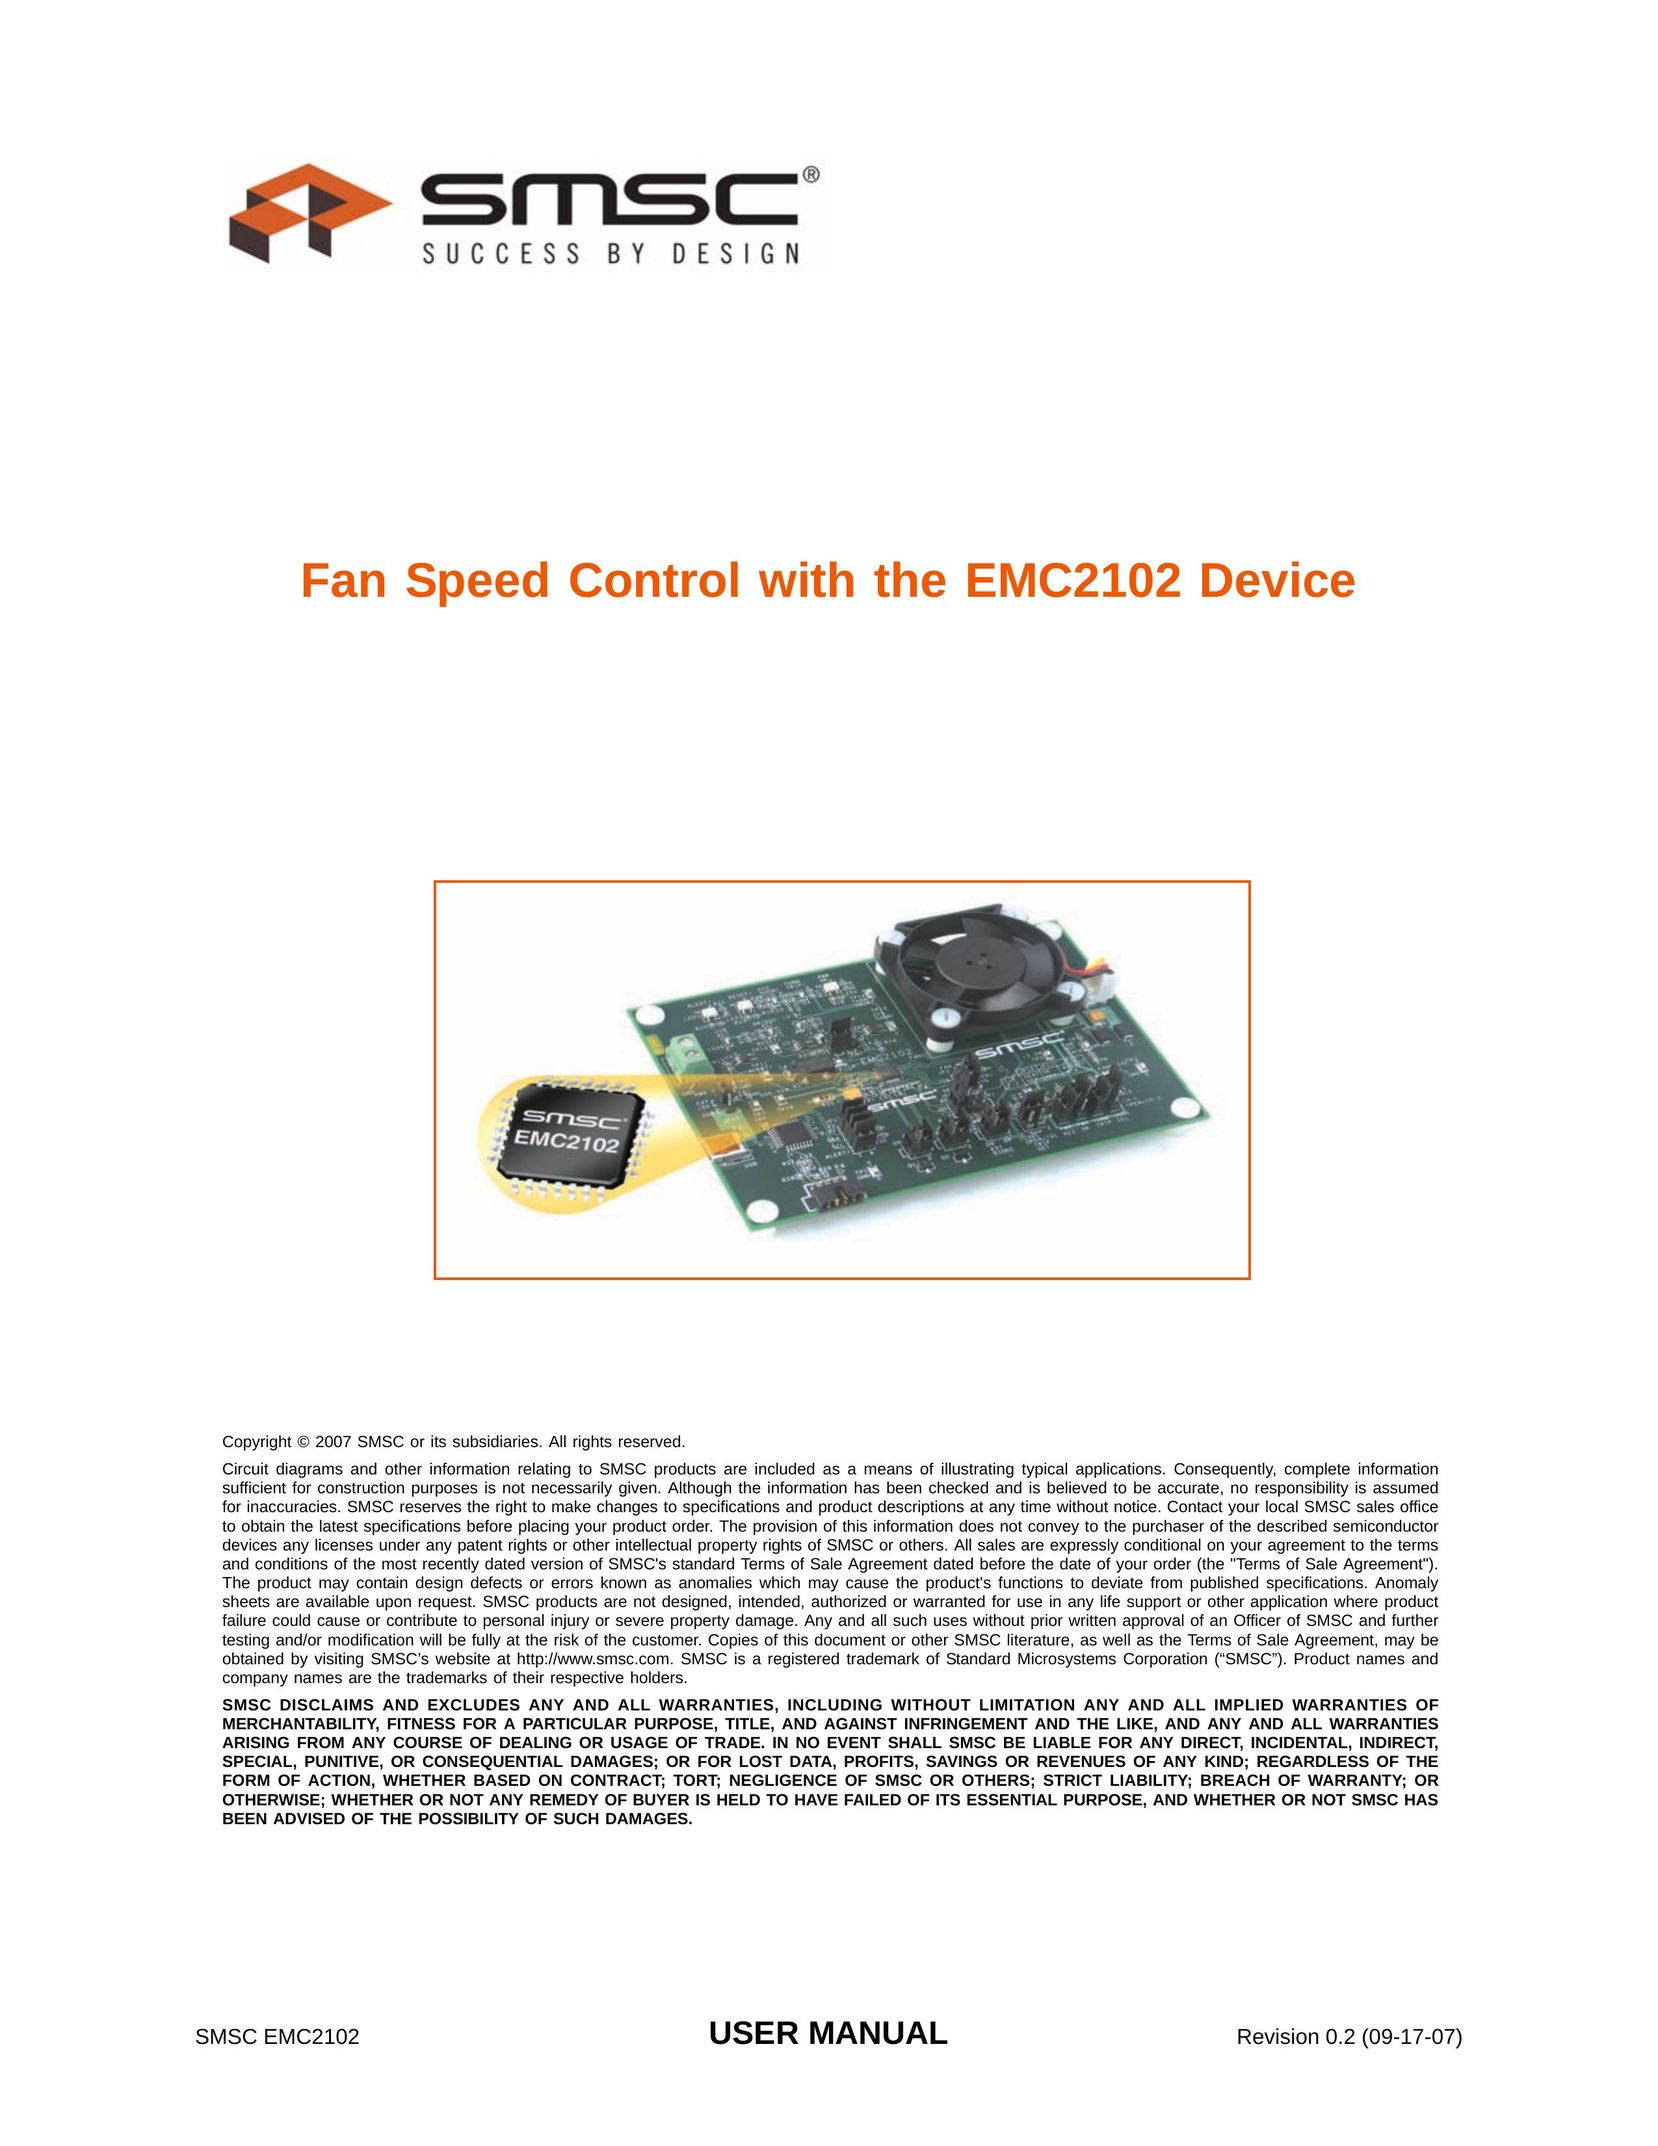 SMSC EMC2102 Computer Hardware User Manual